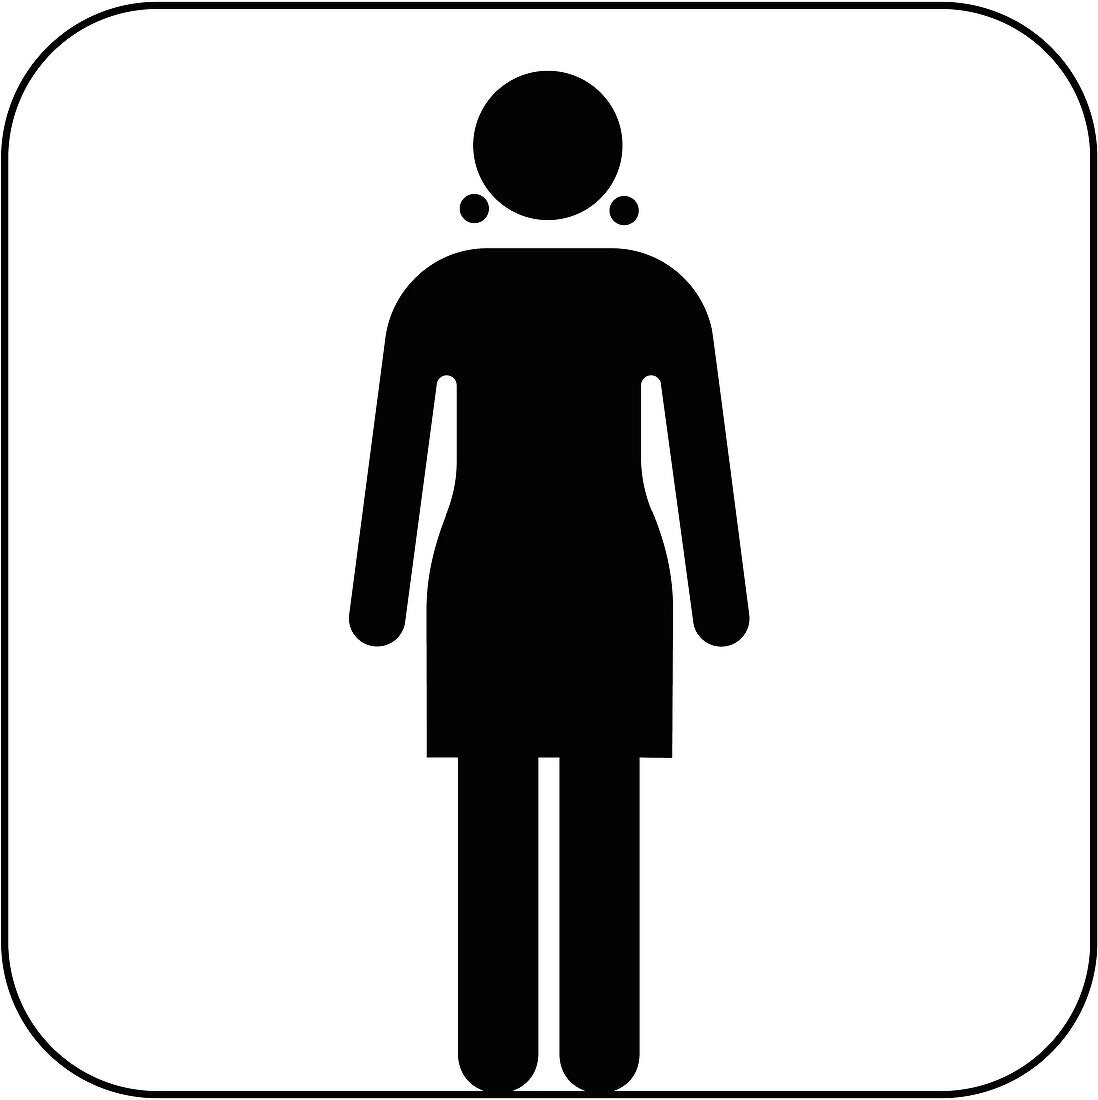 Female symbol,artwork